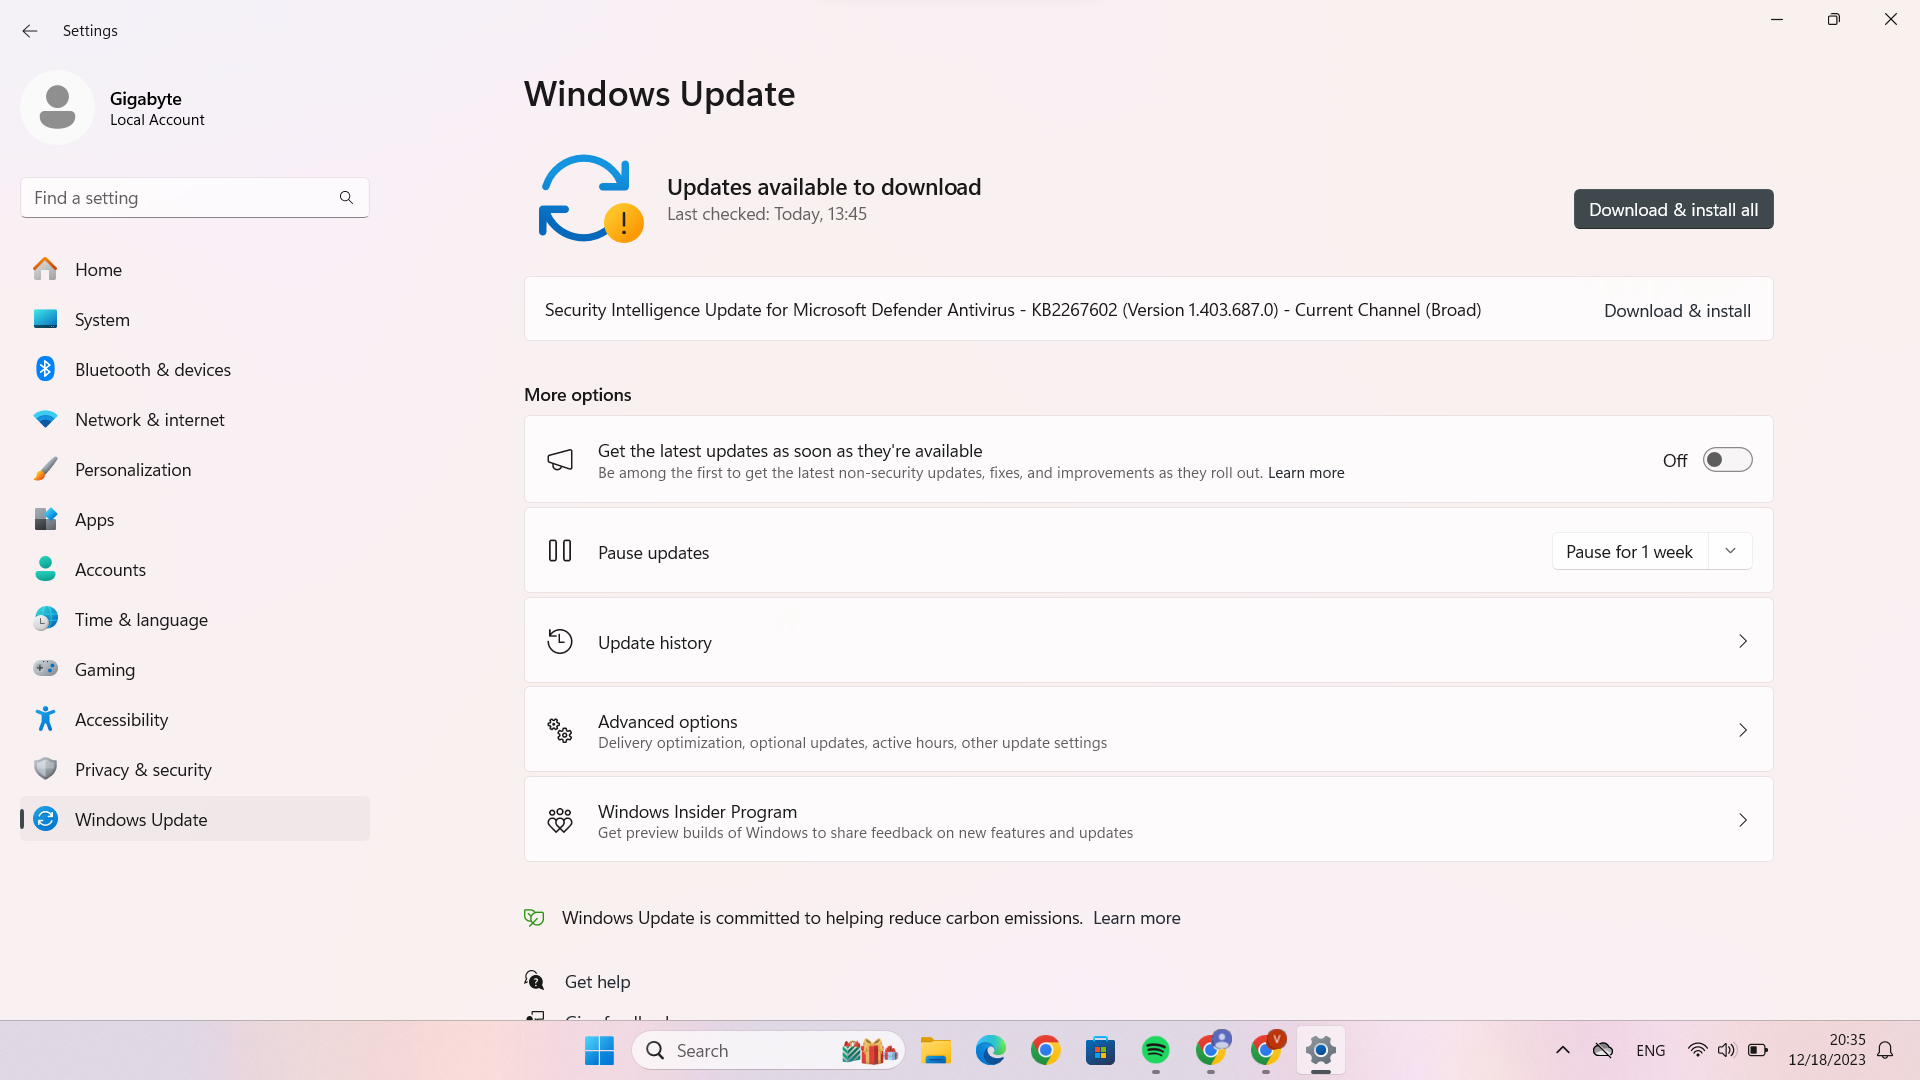 Windows update download & install